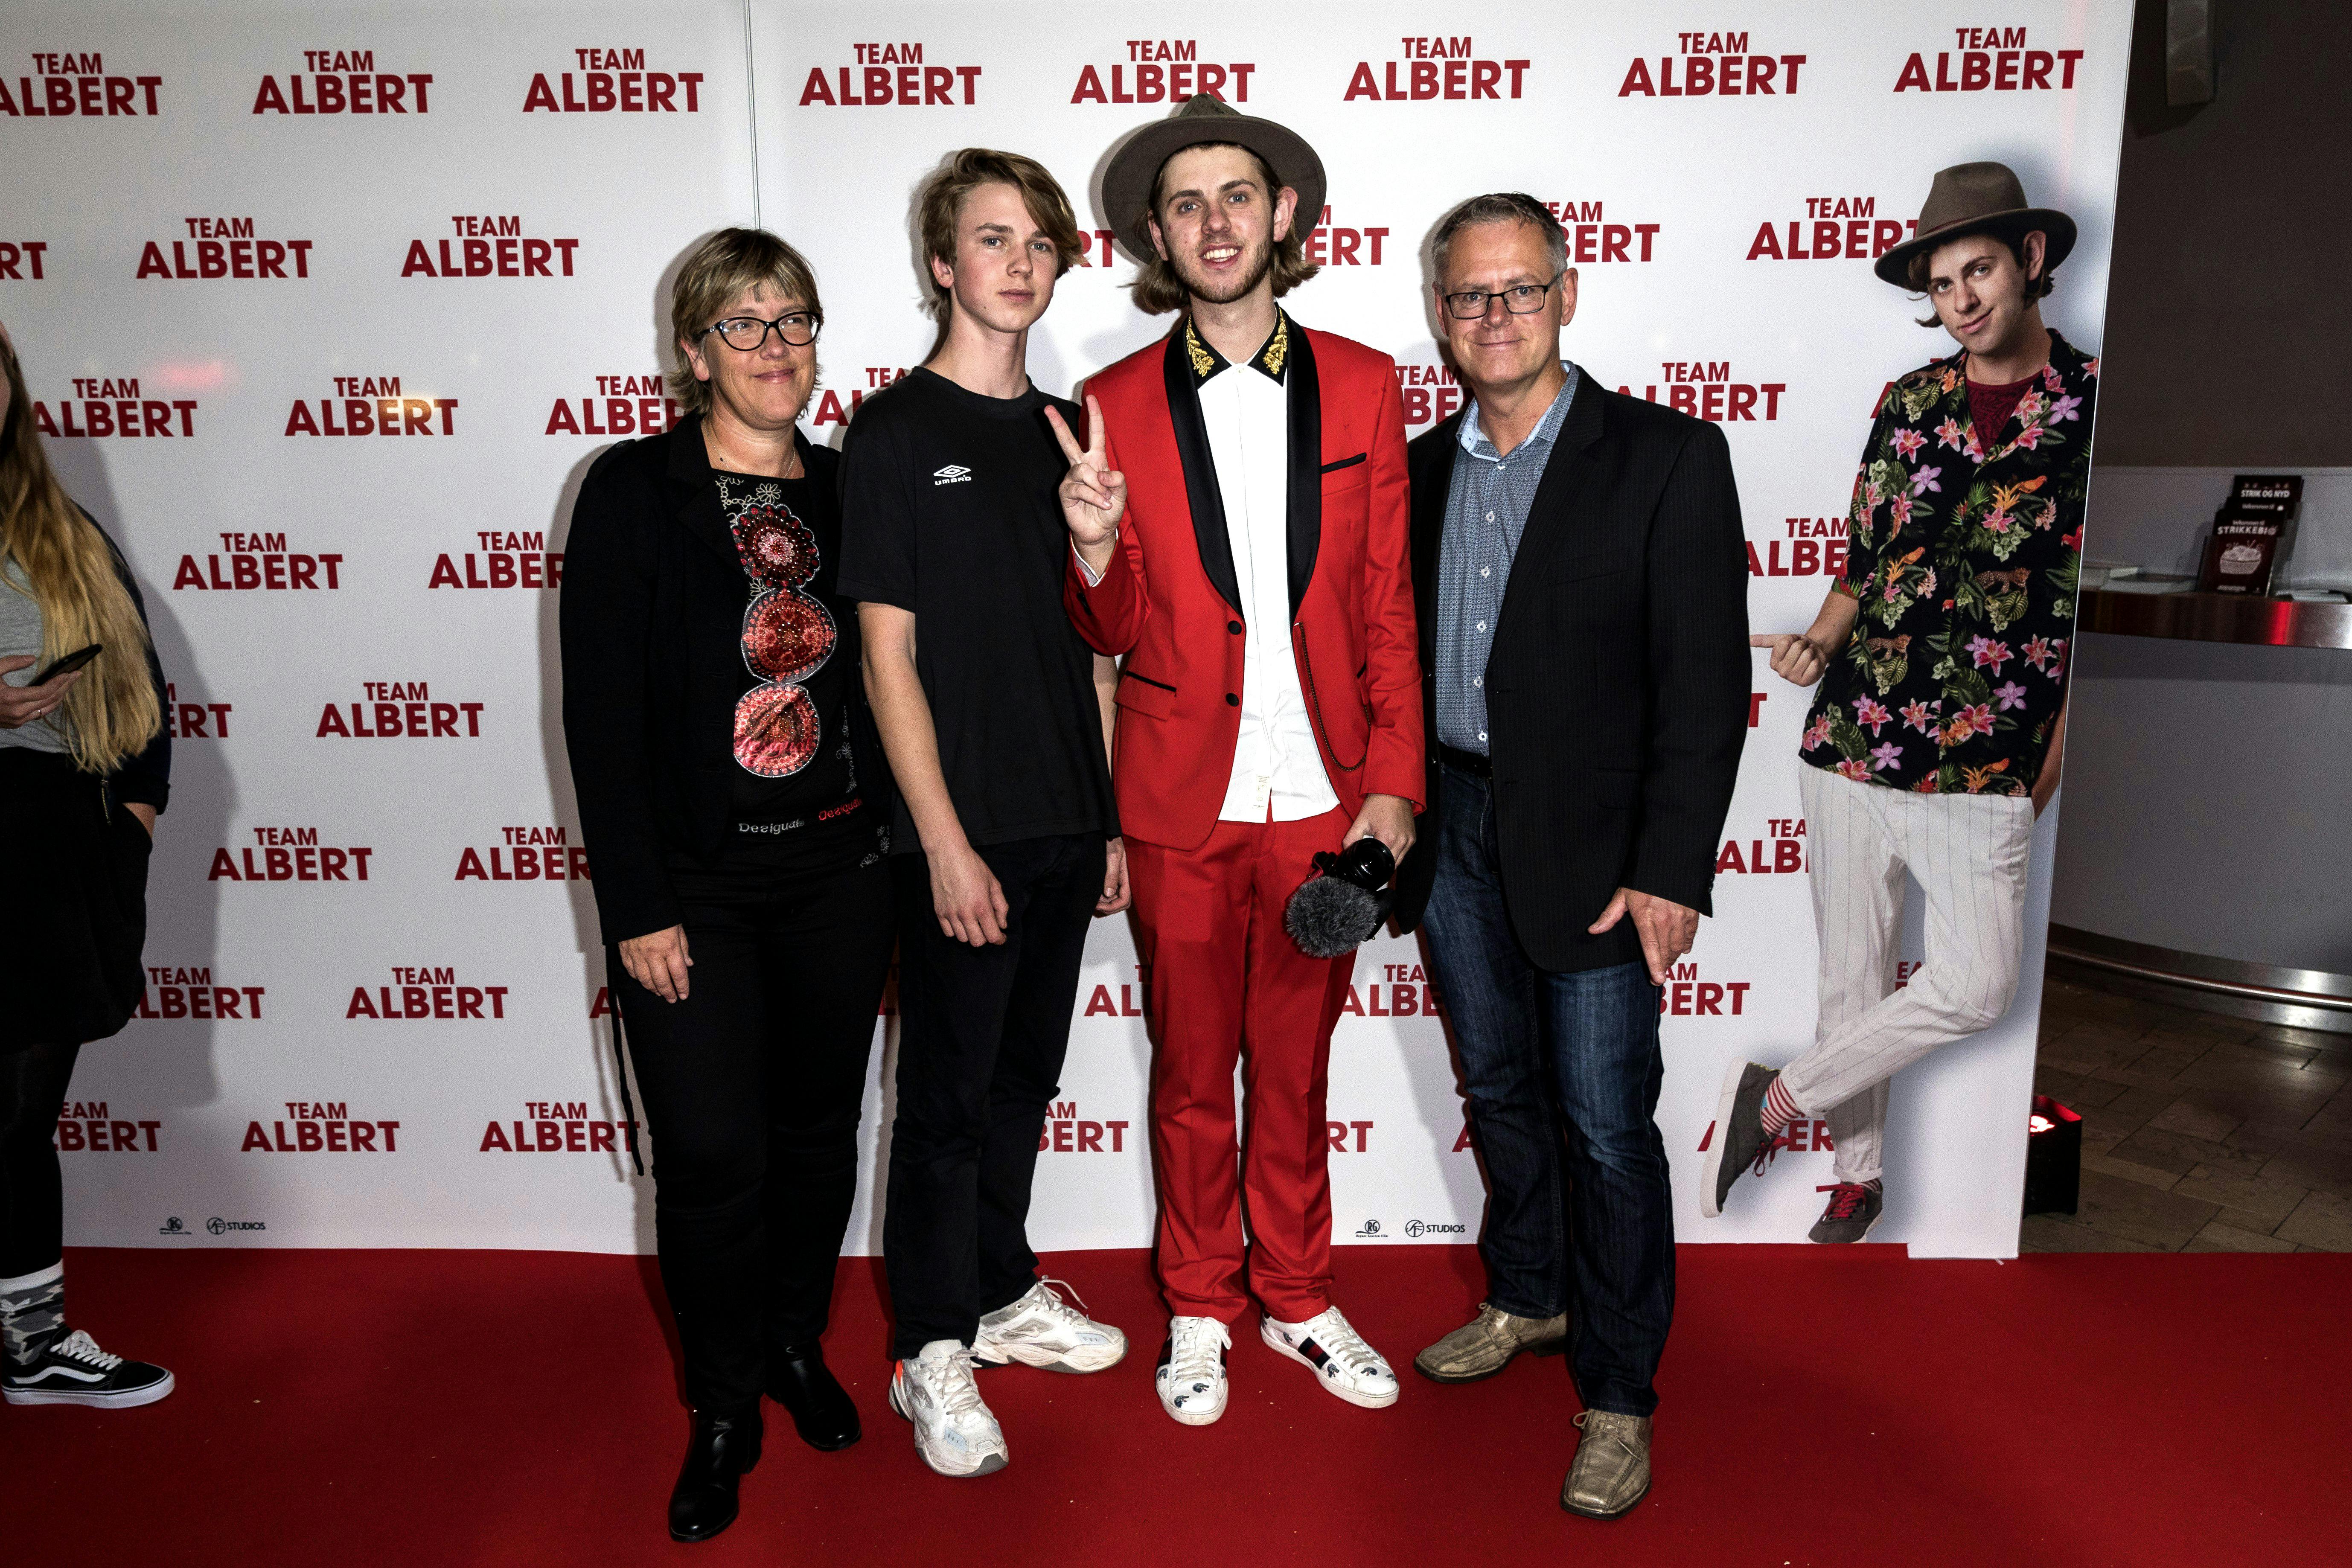 Albert Dyrlund sammen med sine forældre og lillebror Bertram til premieren på filmen "Team Albert".
